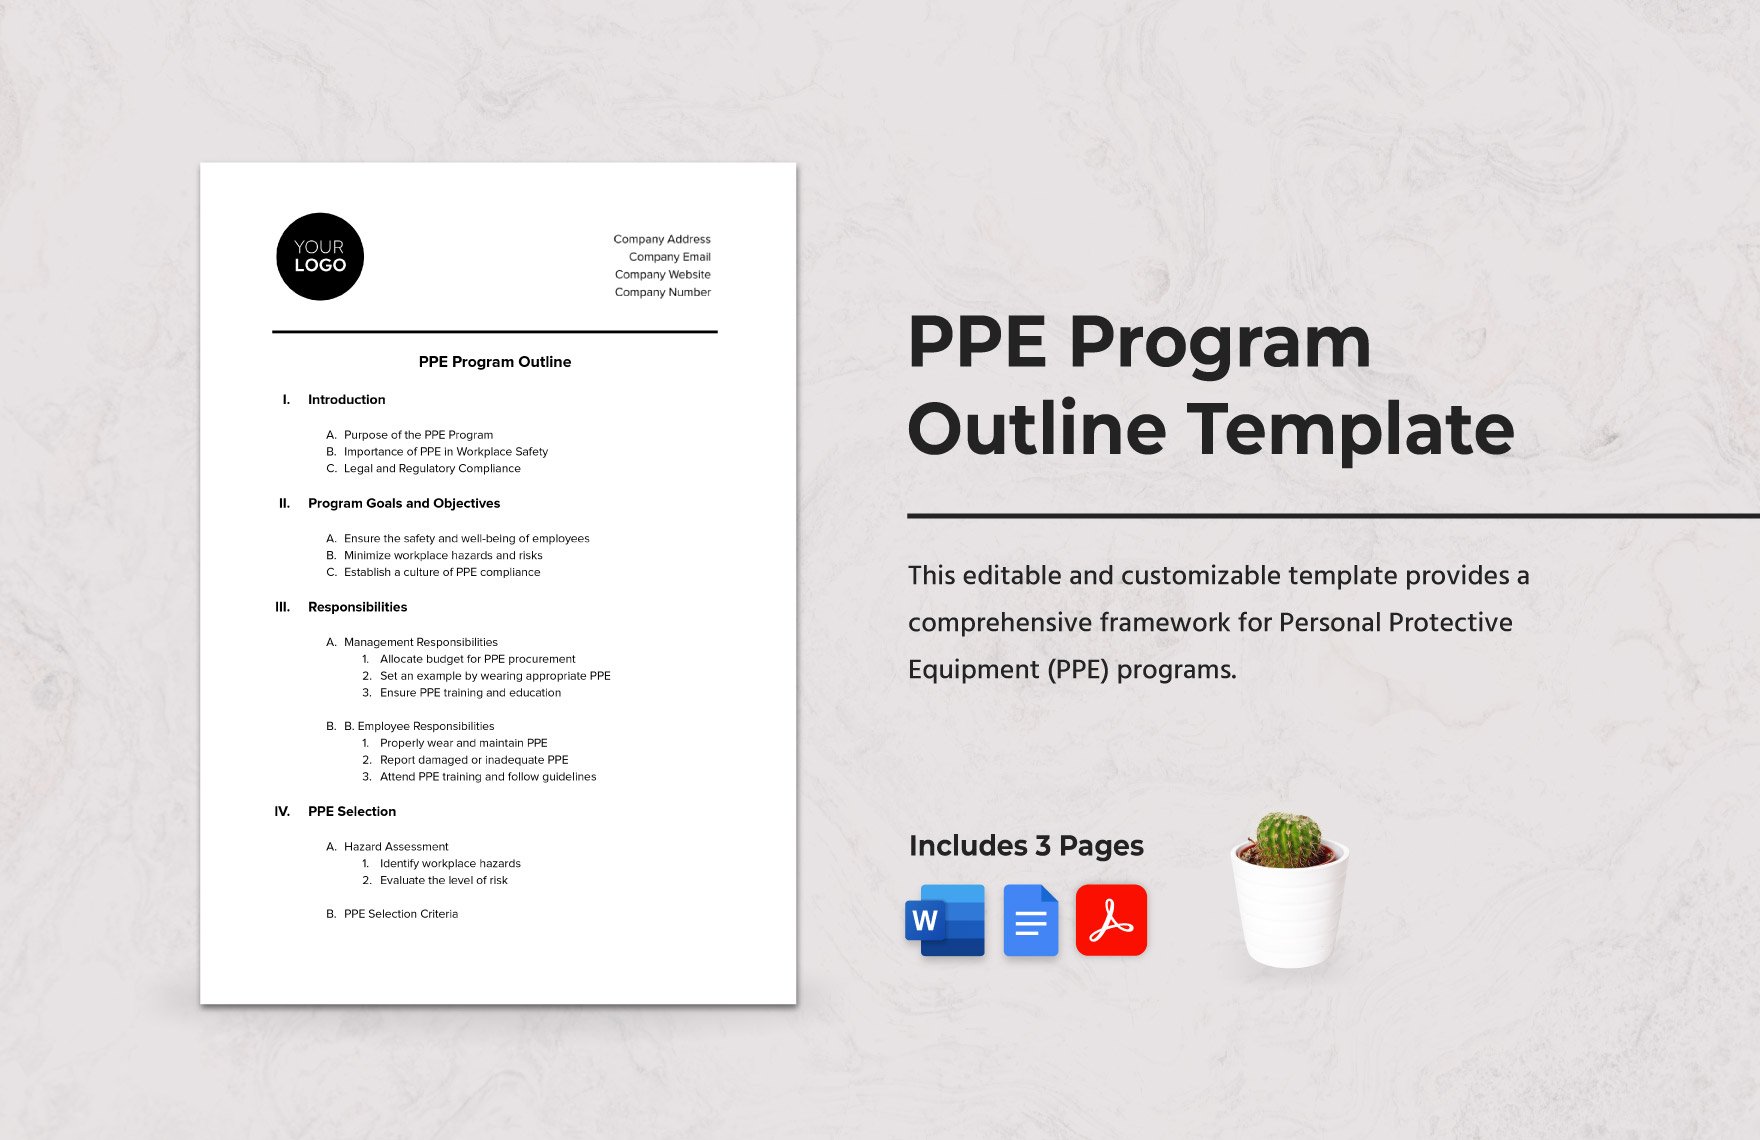 PPE Program Outline Template